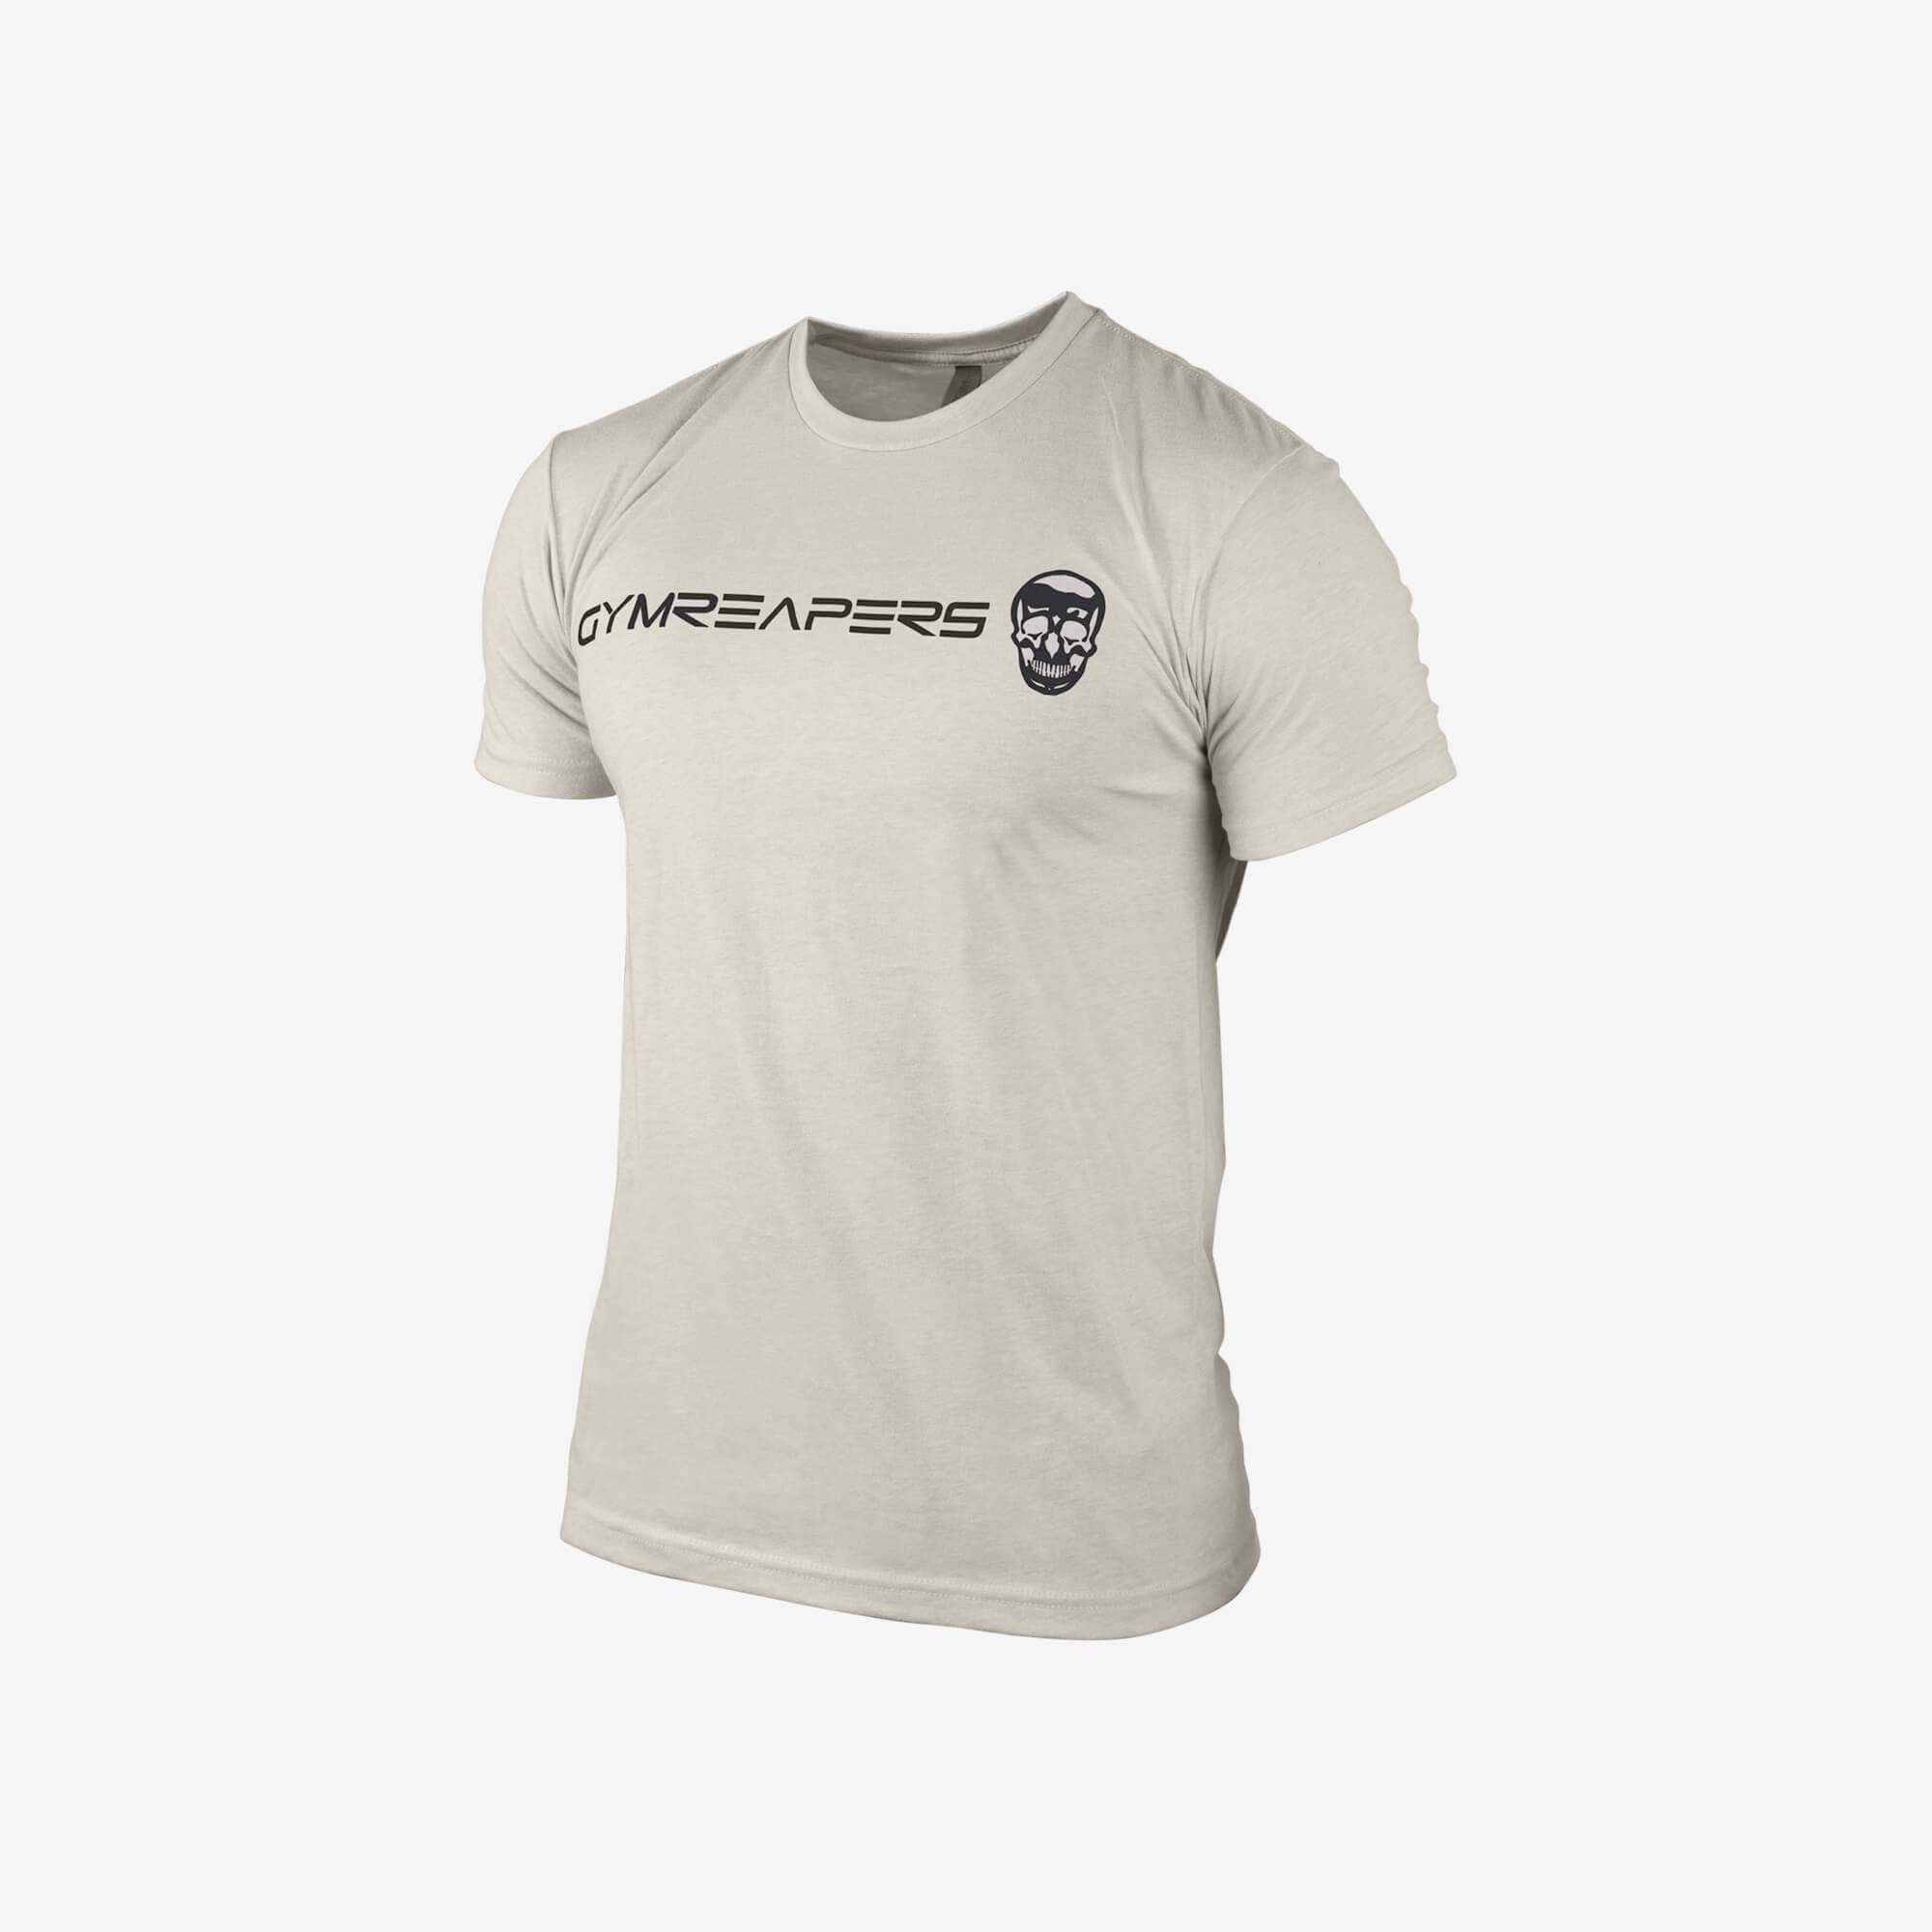 Gymreapers Basic Shirt - Sand/Schwarz